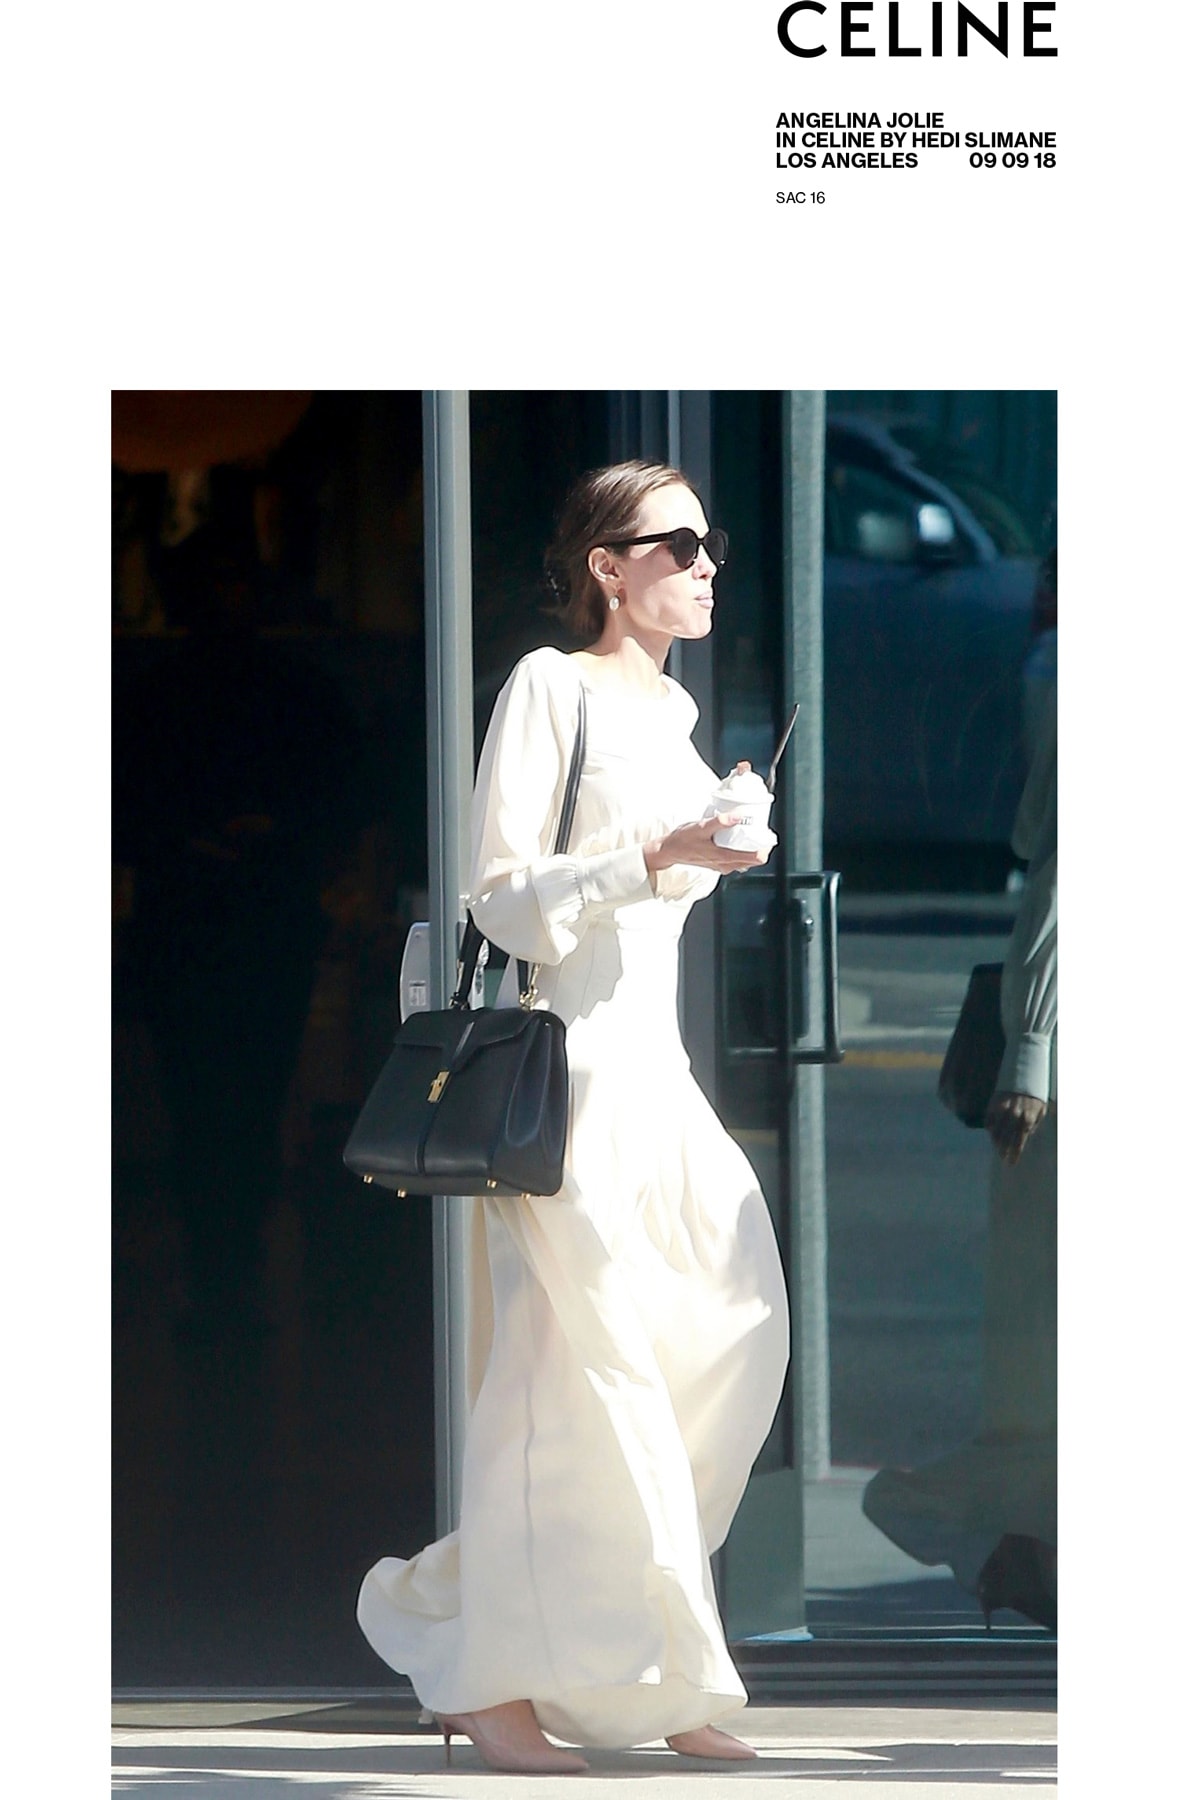 CELINE Campaign With Lady Gaga, Angelina Jolie